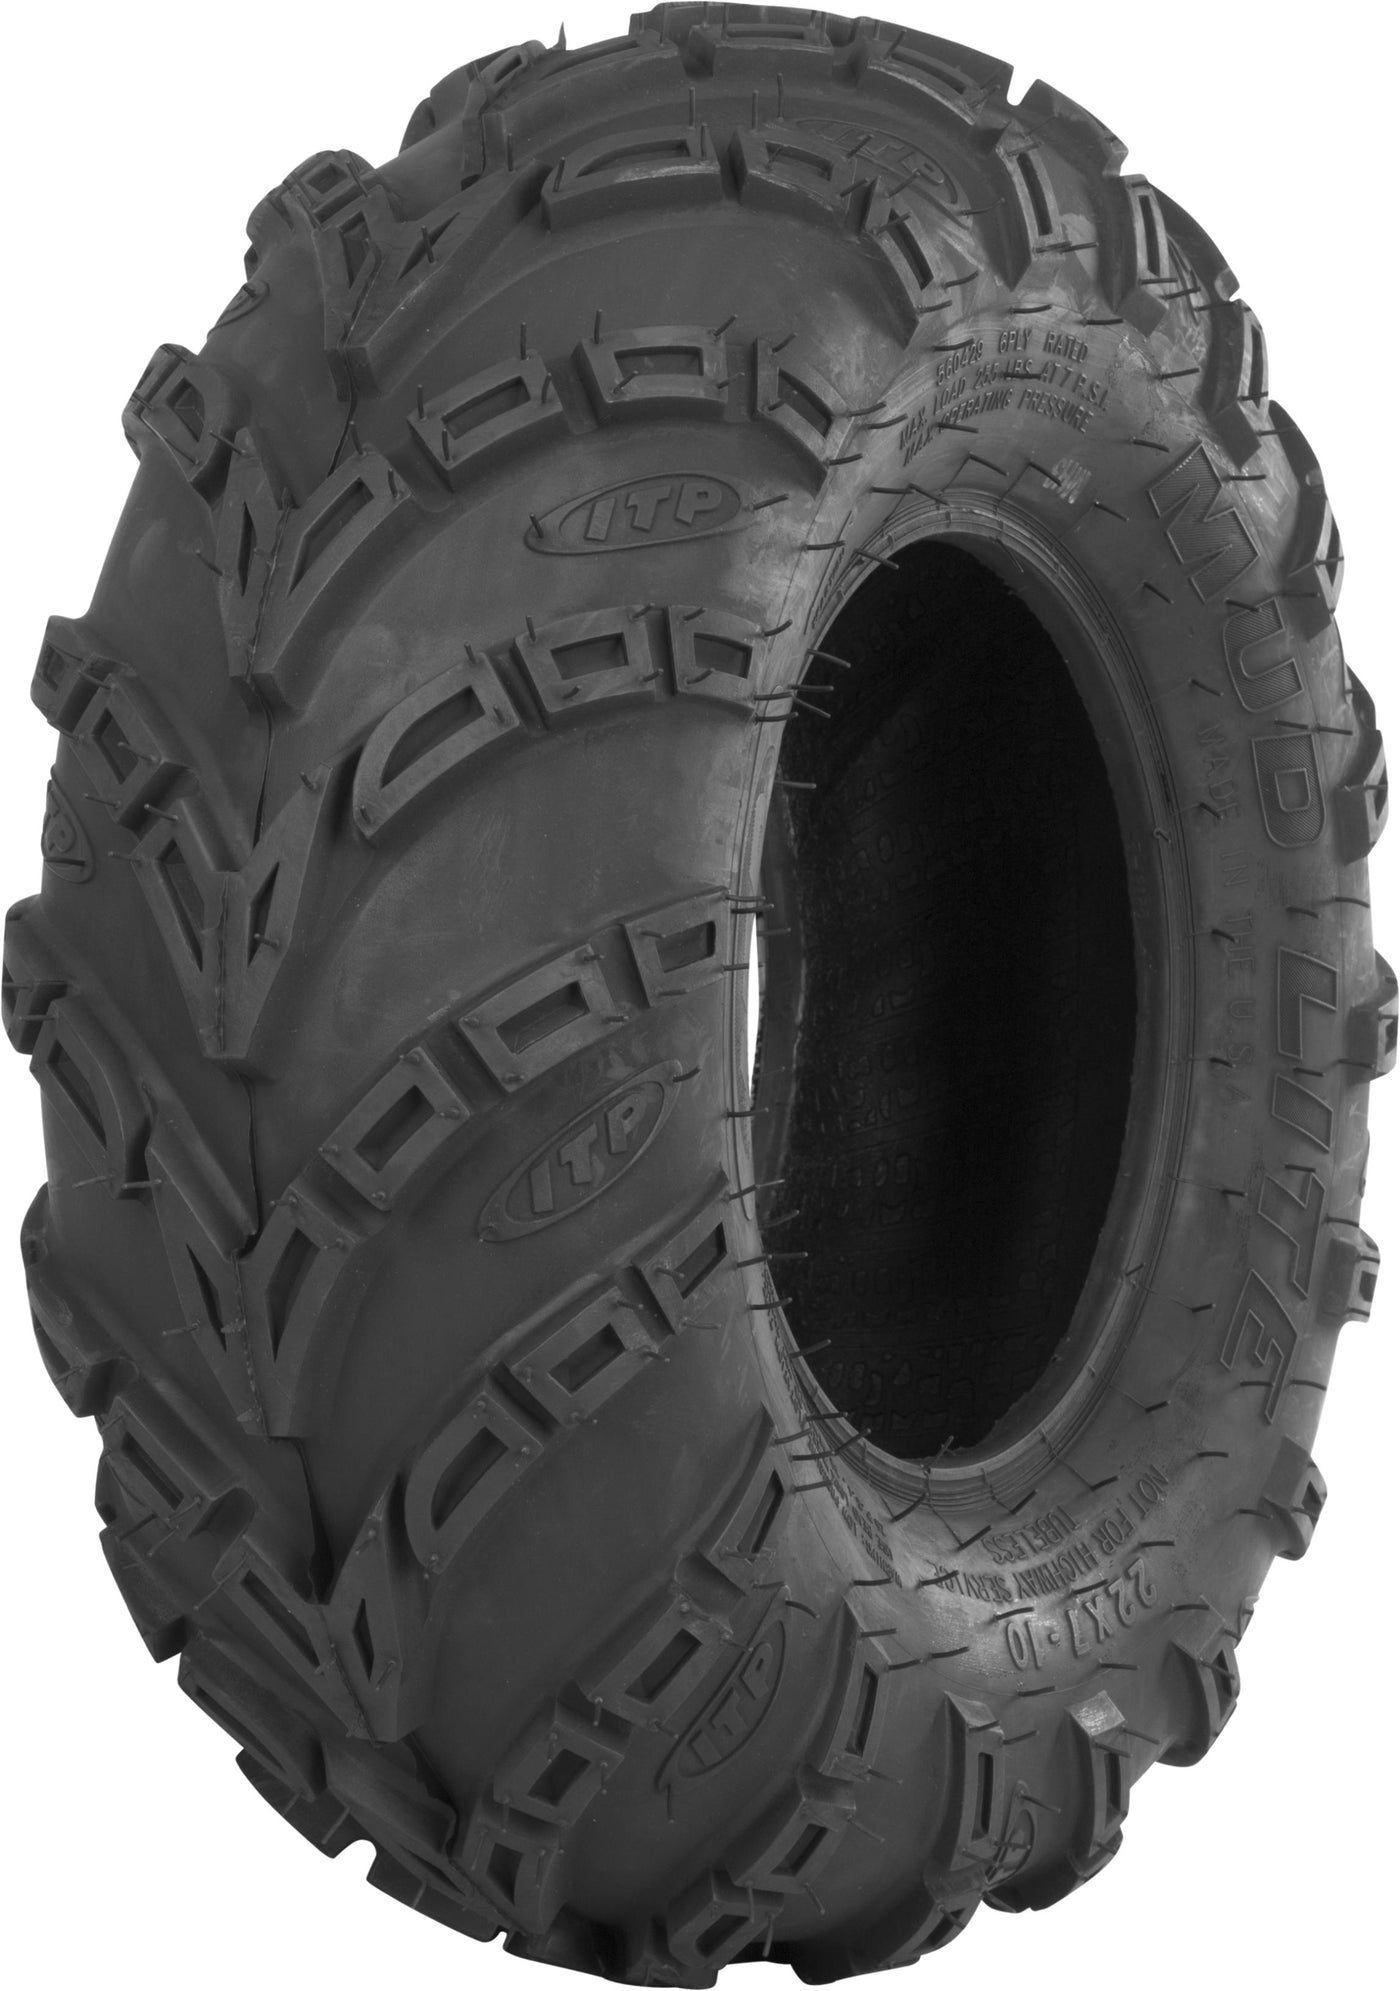 Tire Mud Lite Front 25x8-11 Lr-355lbs Bias